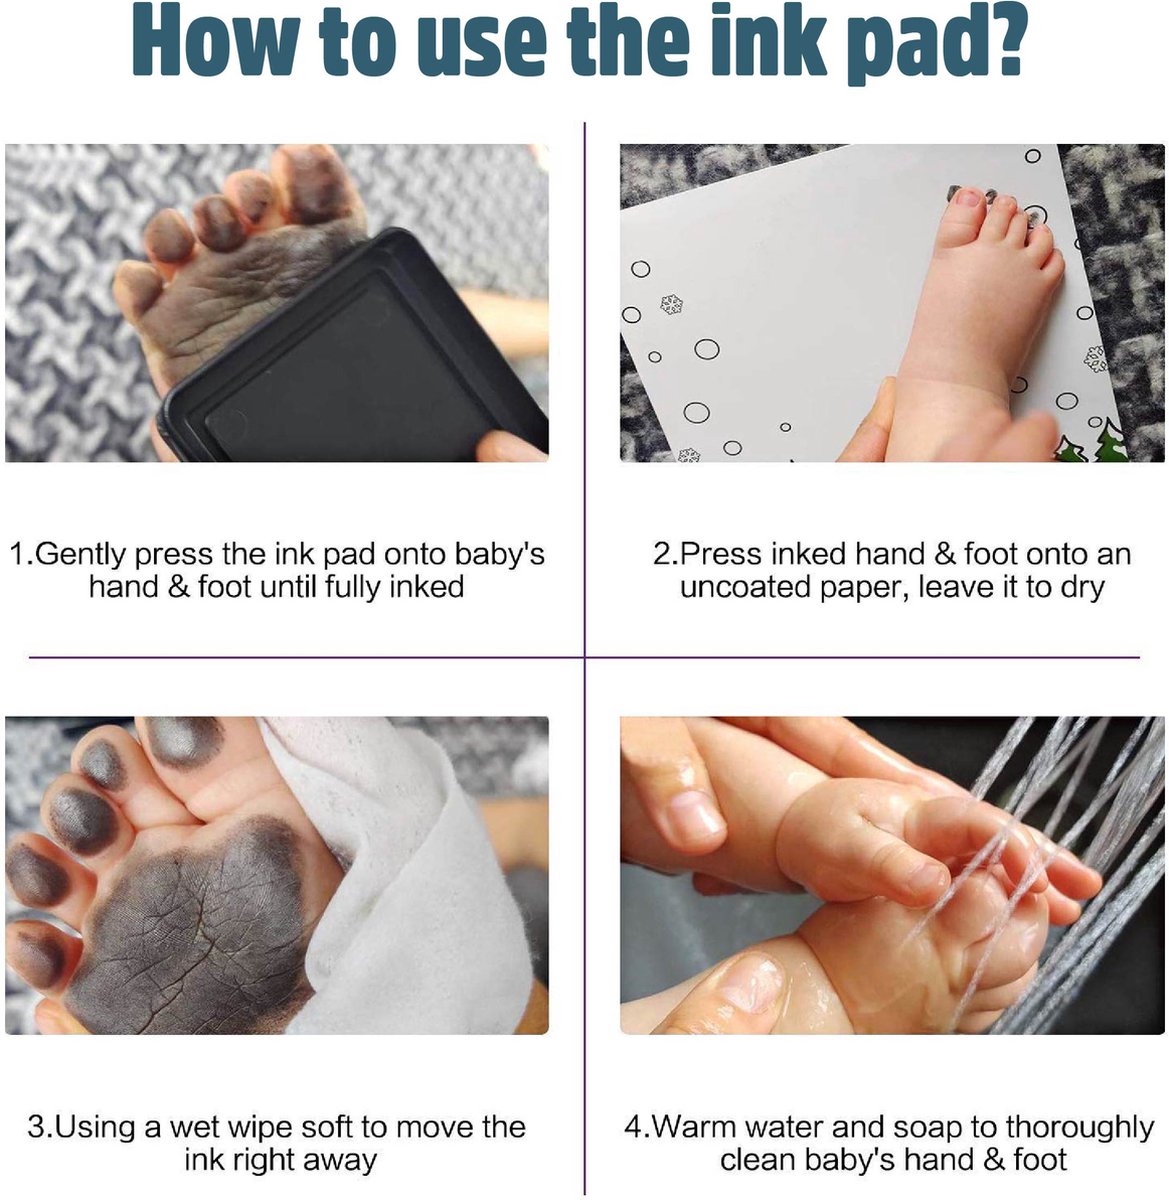 Simple Lifestyle® Kinder Photo Frame Foot Hand Print 12 mois - Cadre photo  bébé